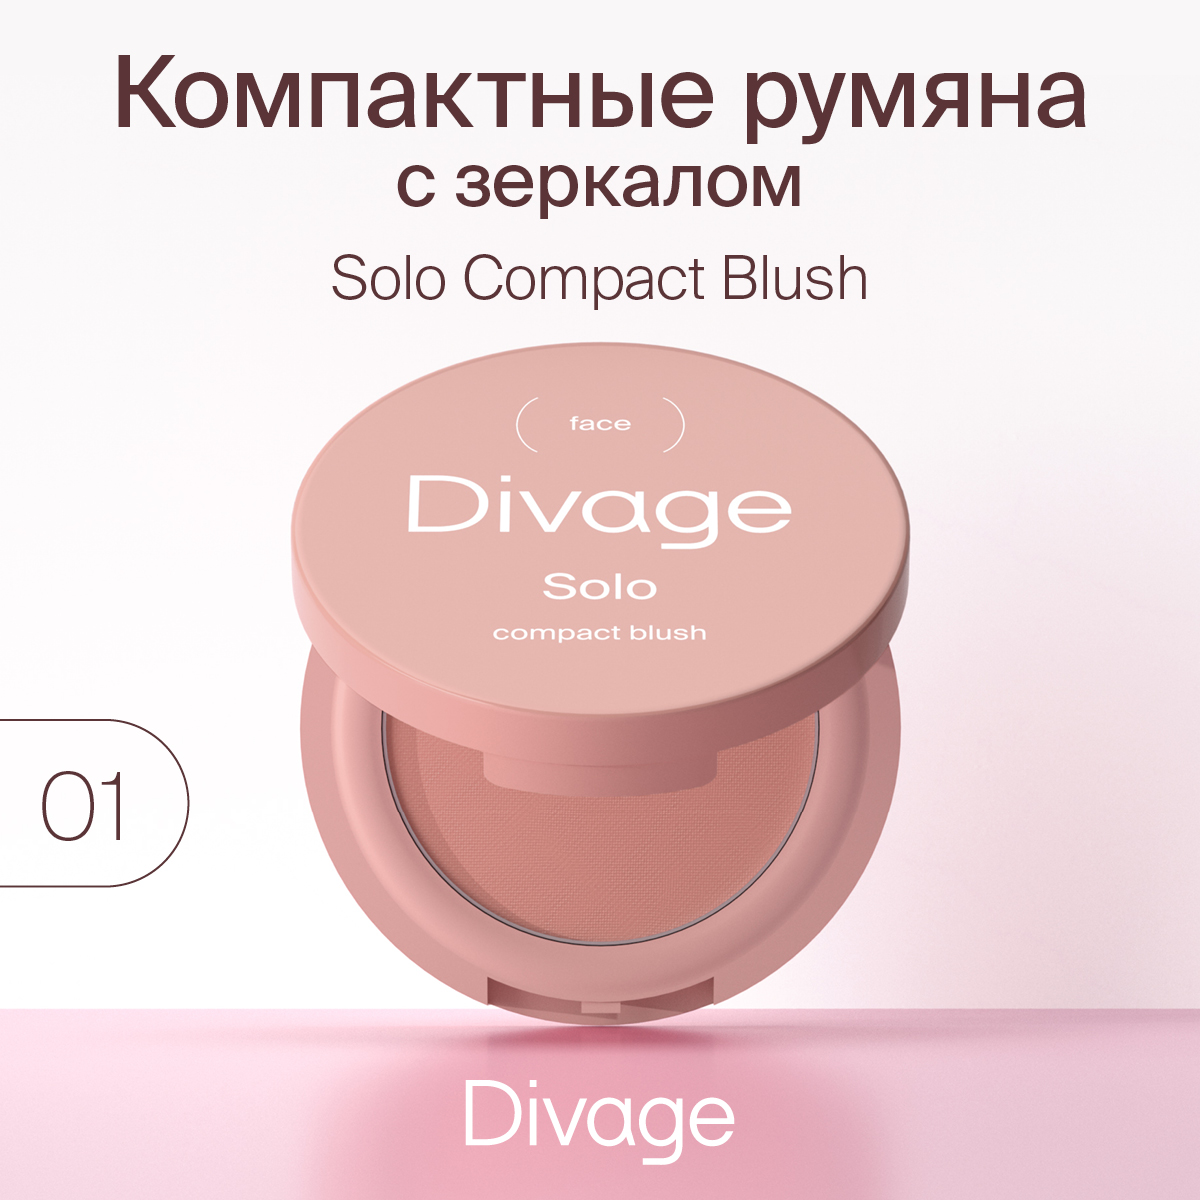 Румяна Divage Solo Compact Blush тон 01 светло-коричневые 2 г